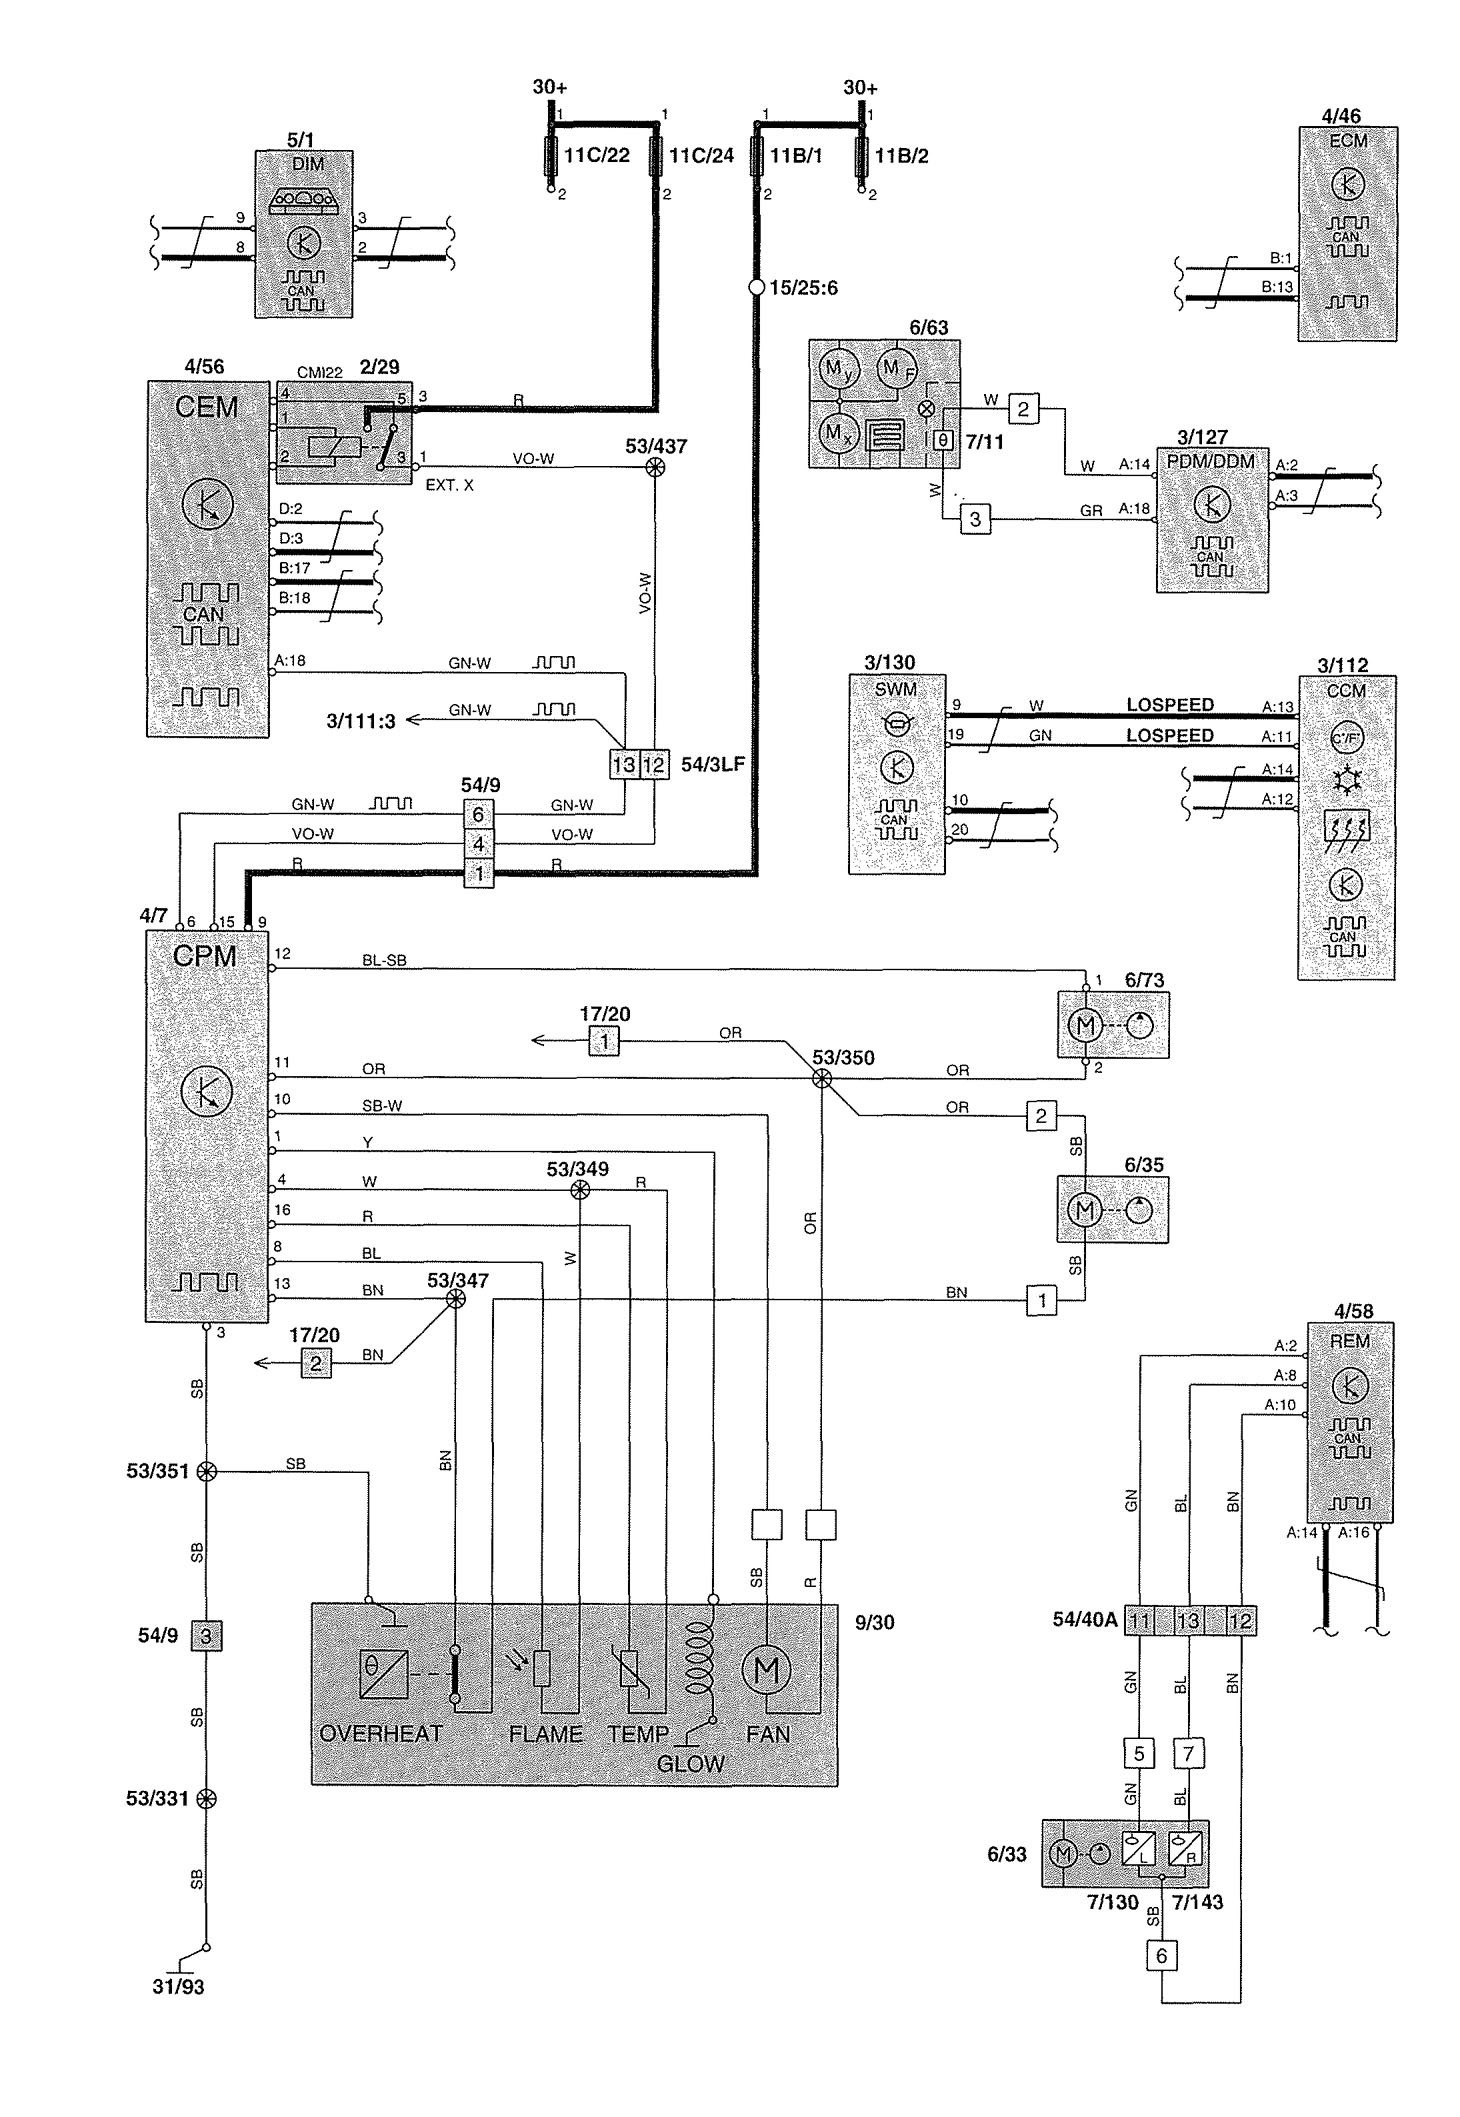 Volvo S80 T6 Complete Engine Wiring Grafik 2000 Volvo S80 T6 Engine Diagram Hd Quality Linkdiagrams Freiheitfuermumia De Of Volvo S80 T6 Complete Engine Wiring